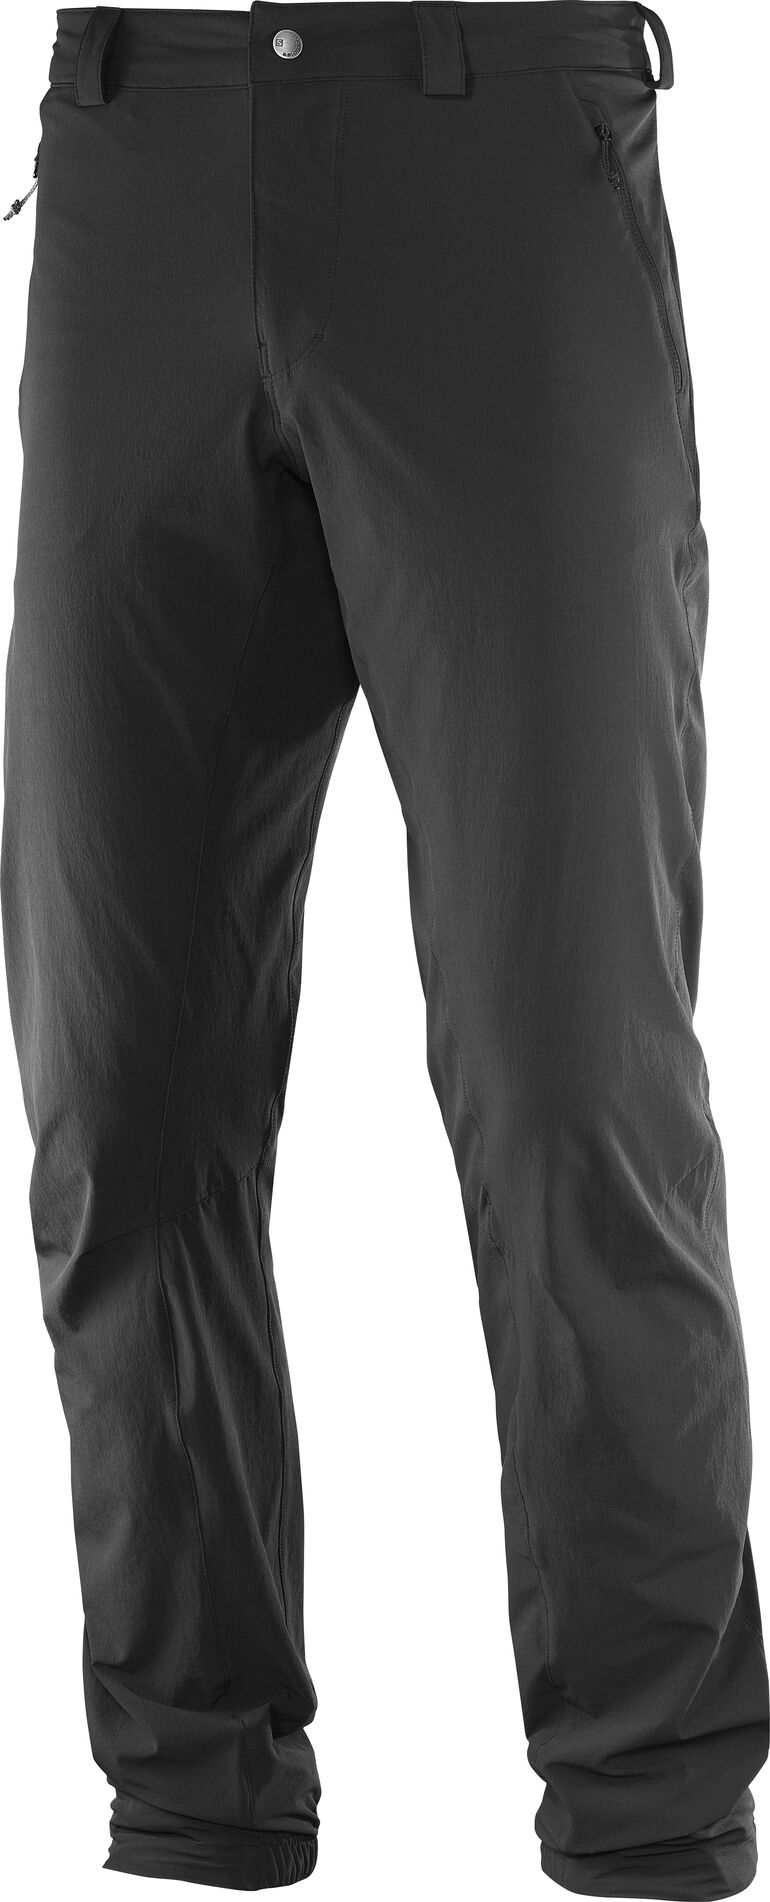 Salomon - Wayfarer Incline Pant M - Trekking trousers - Men's